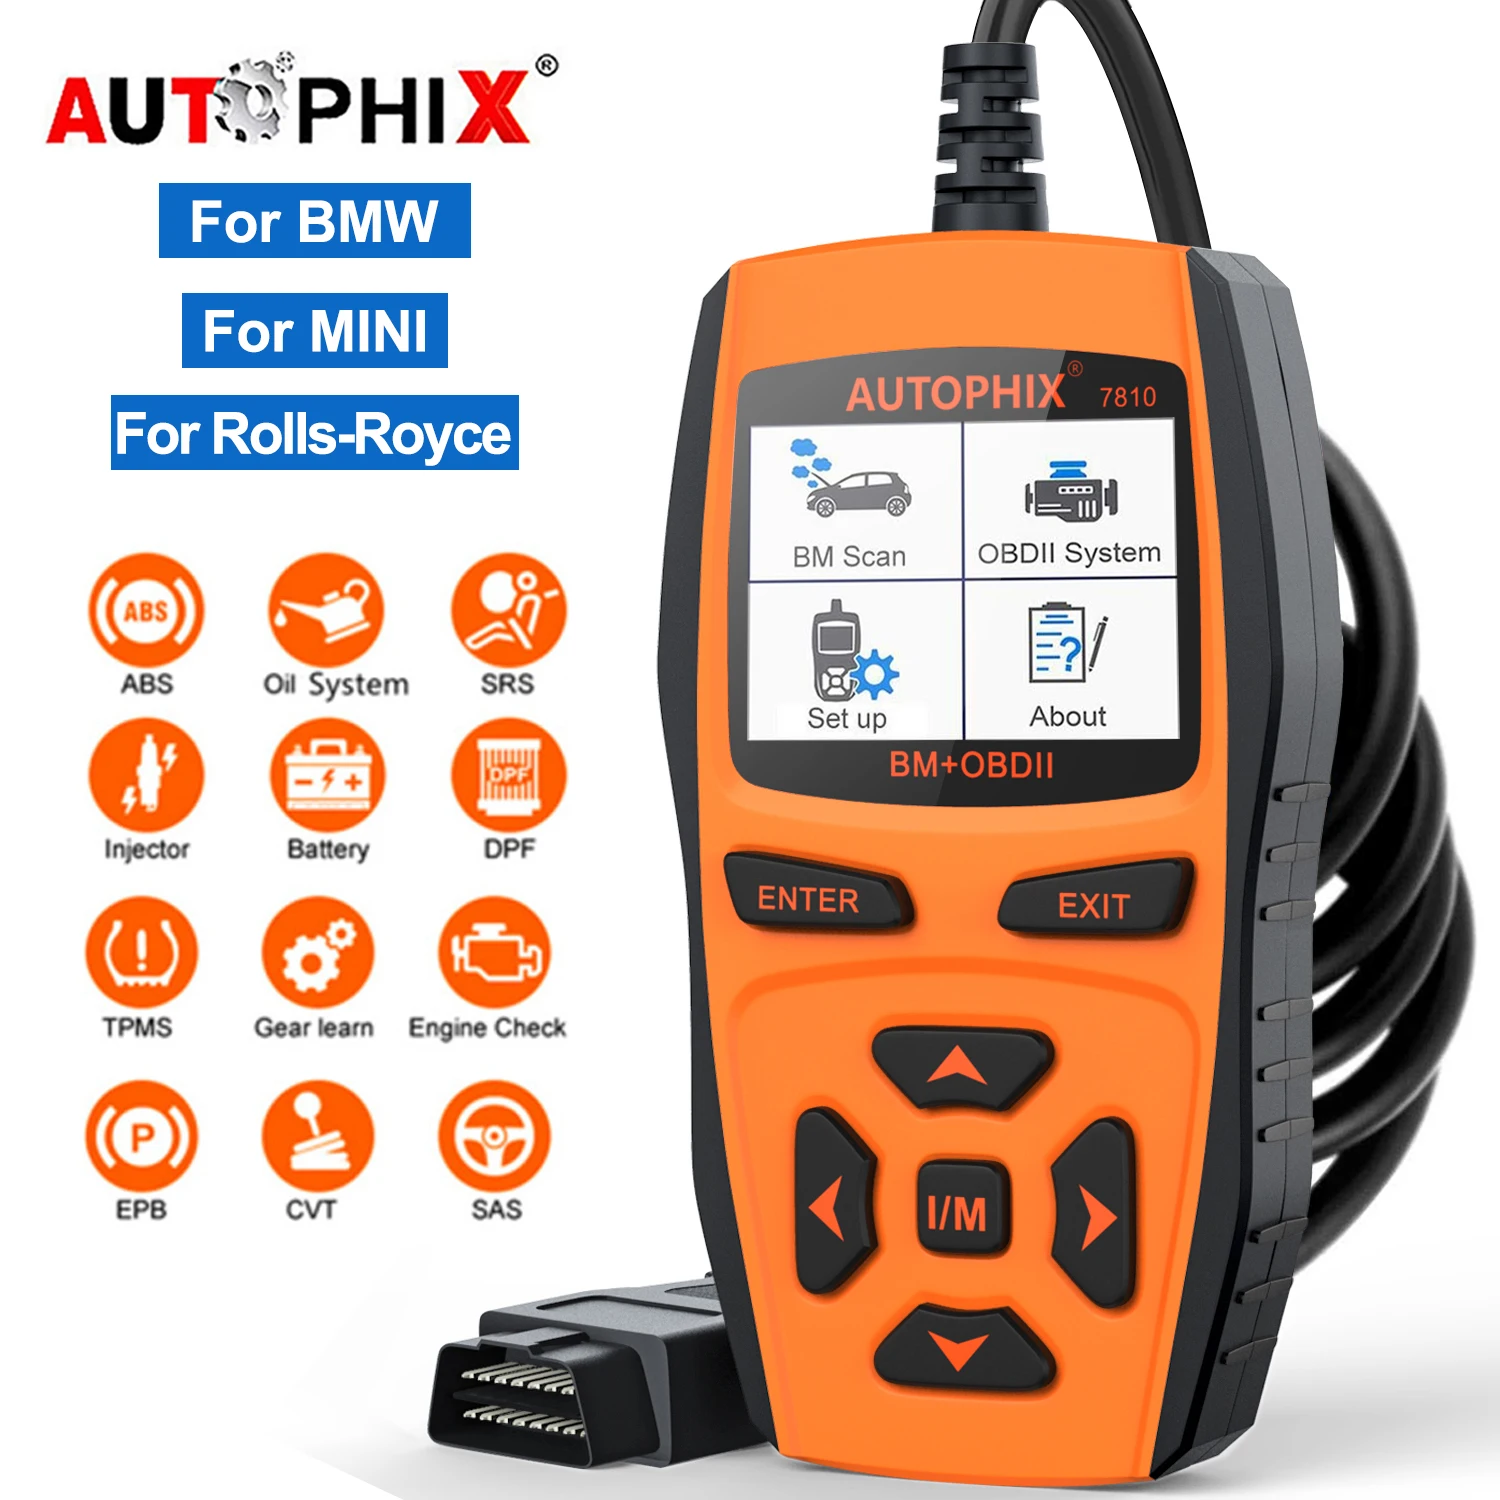 AUTOPHIX 7810 OBD2 Scanner Car Diagnostic Tool Code Reader for BMW Battery Registration EPB EGS DME DDE CBS F Chassis ECU Reset